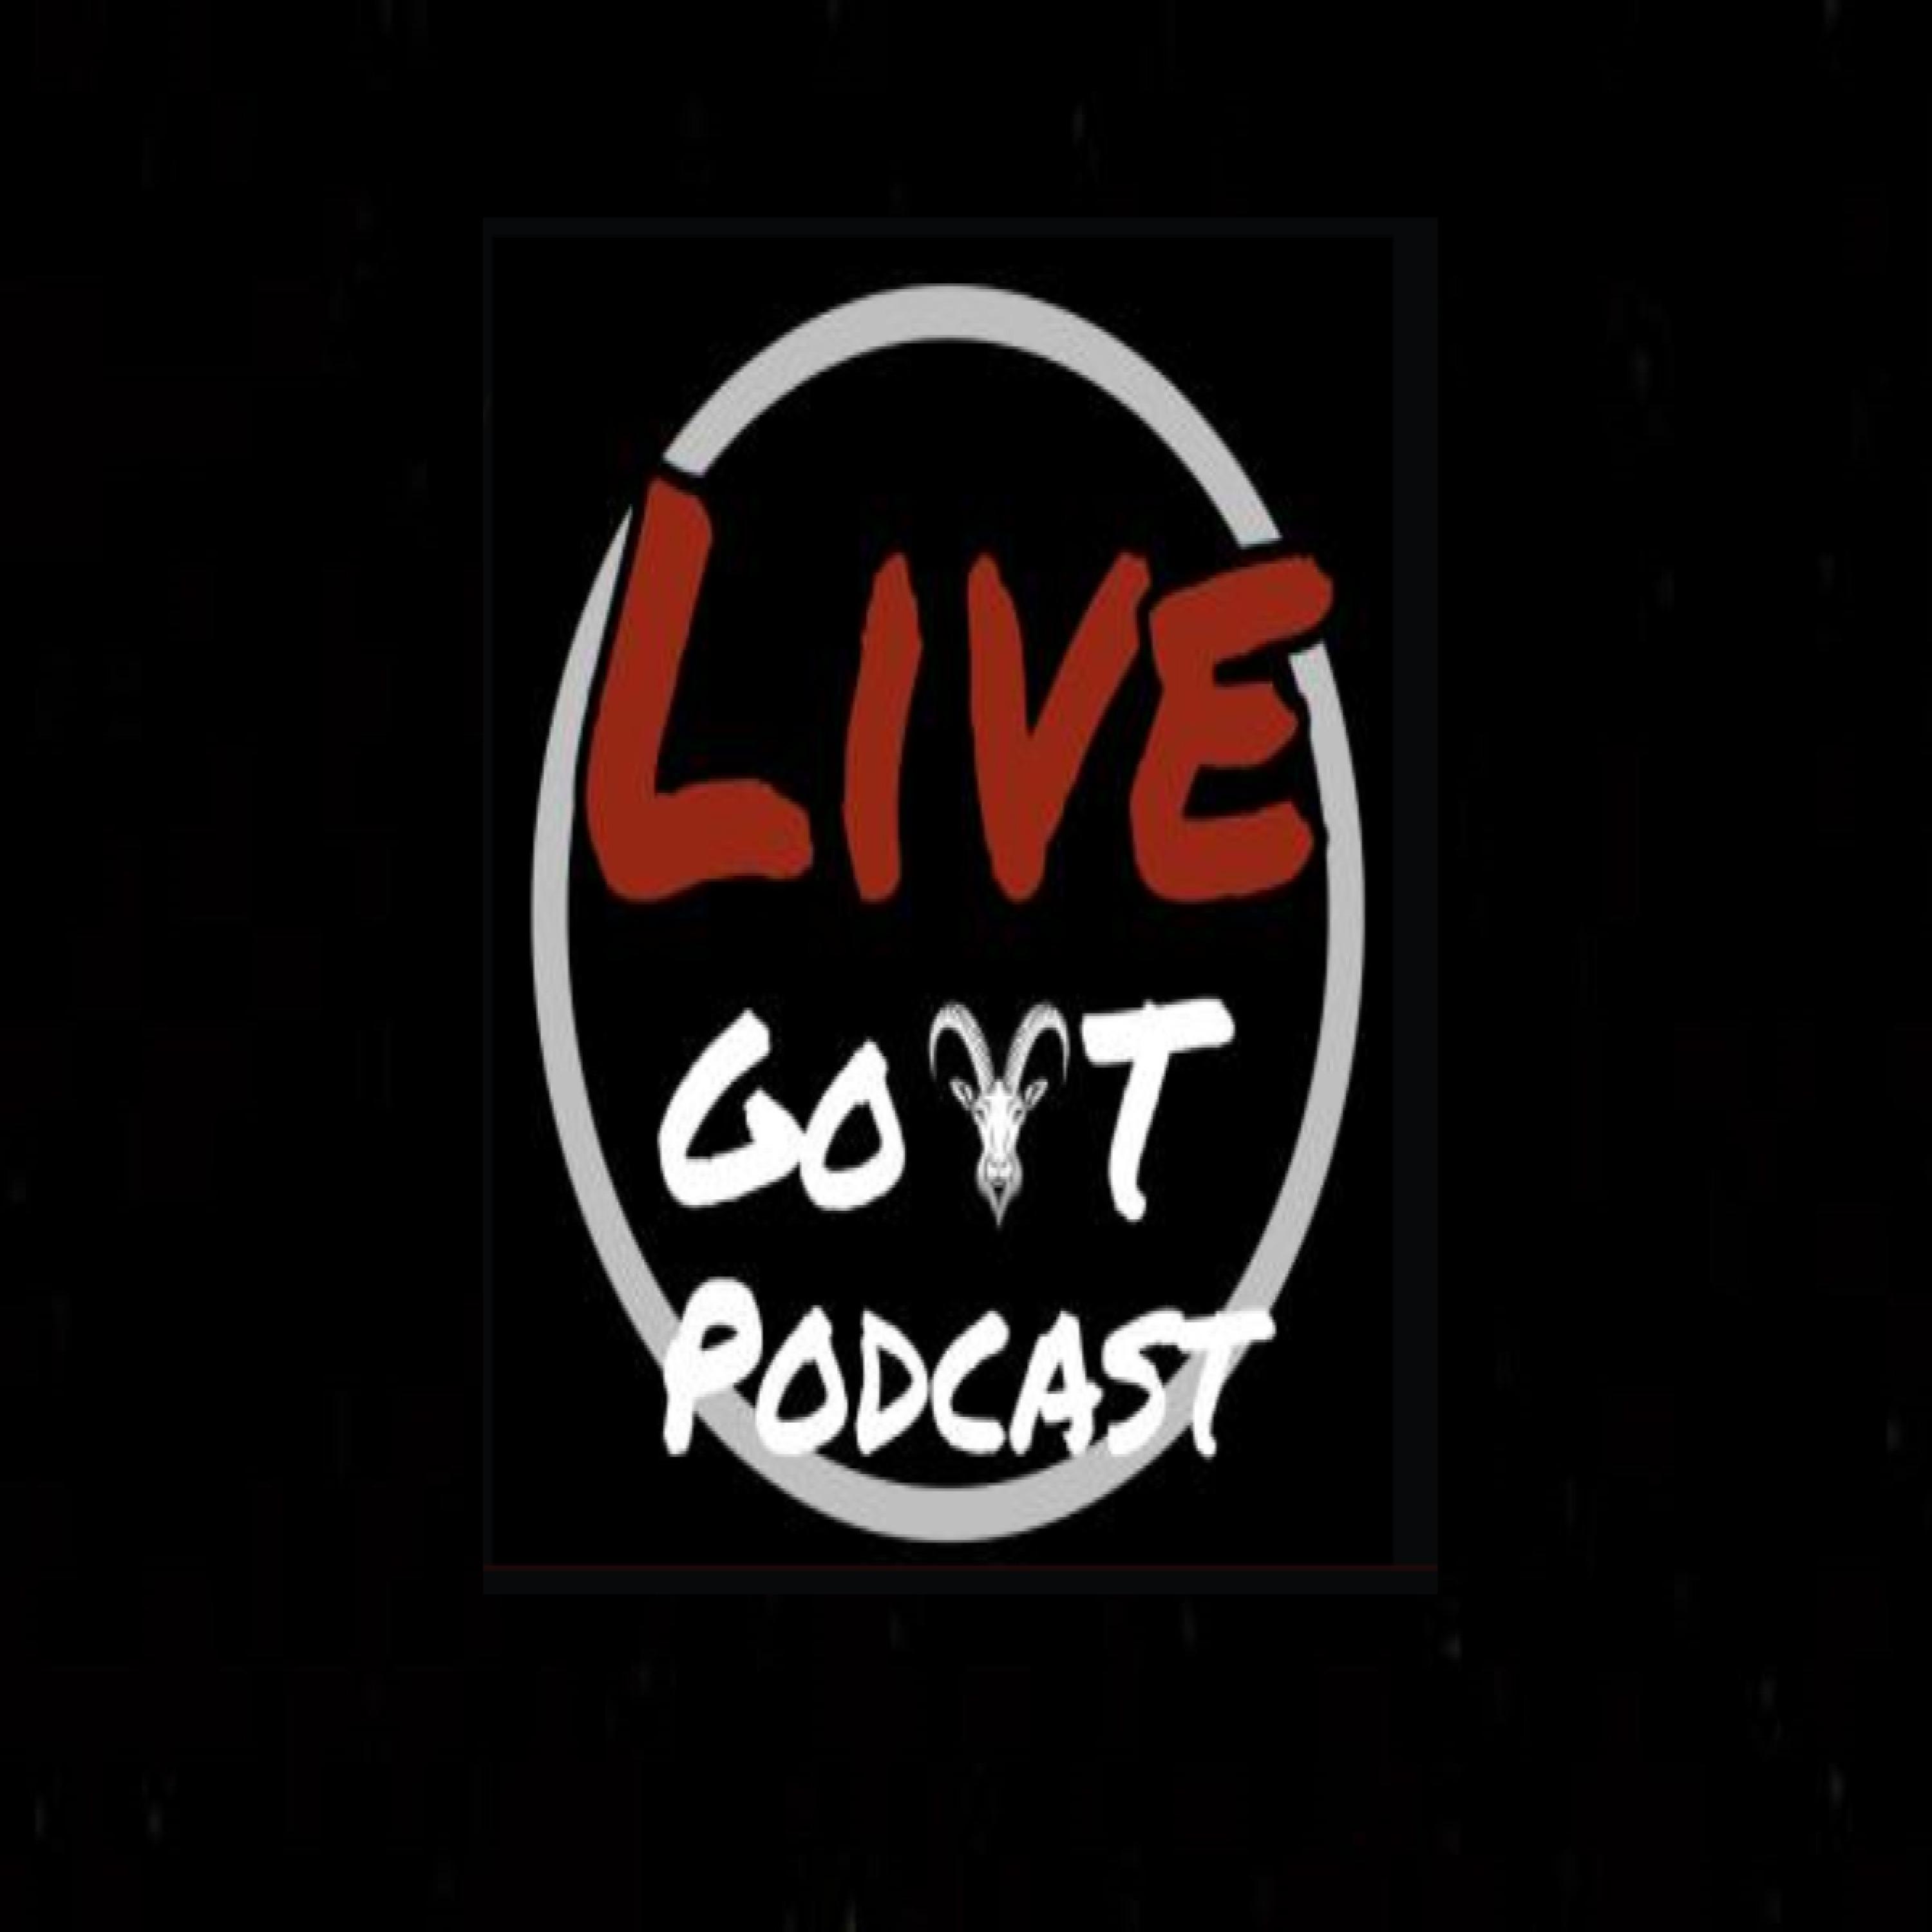 Live Goat Podcast